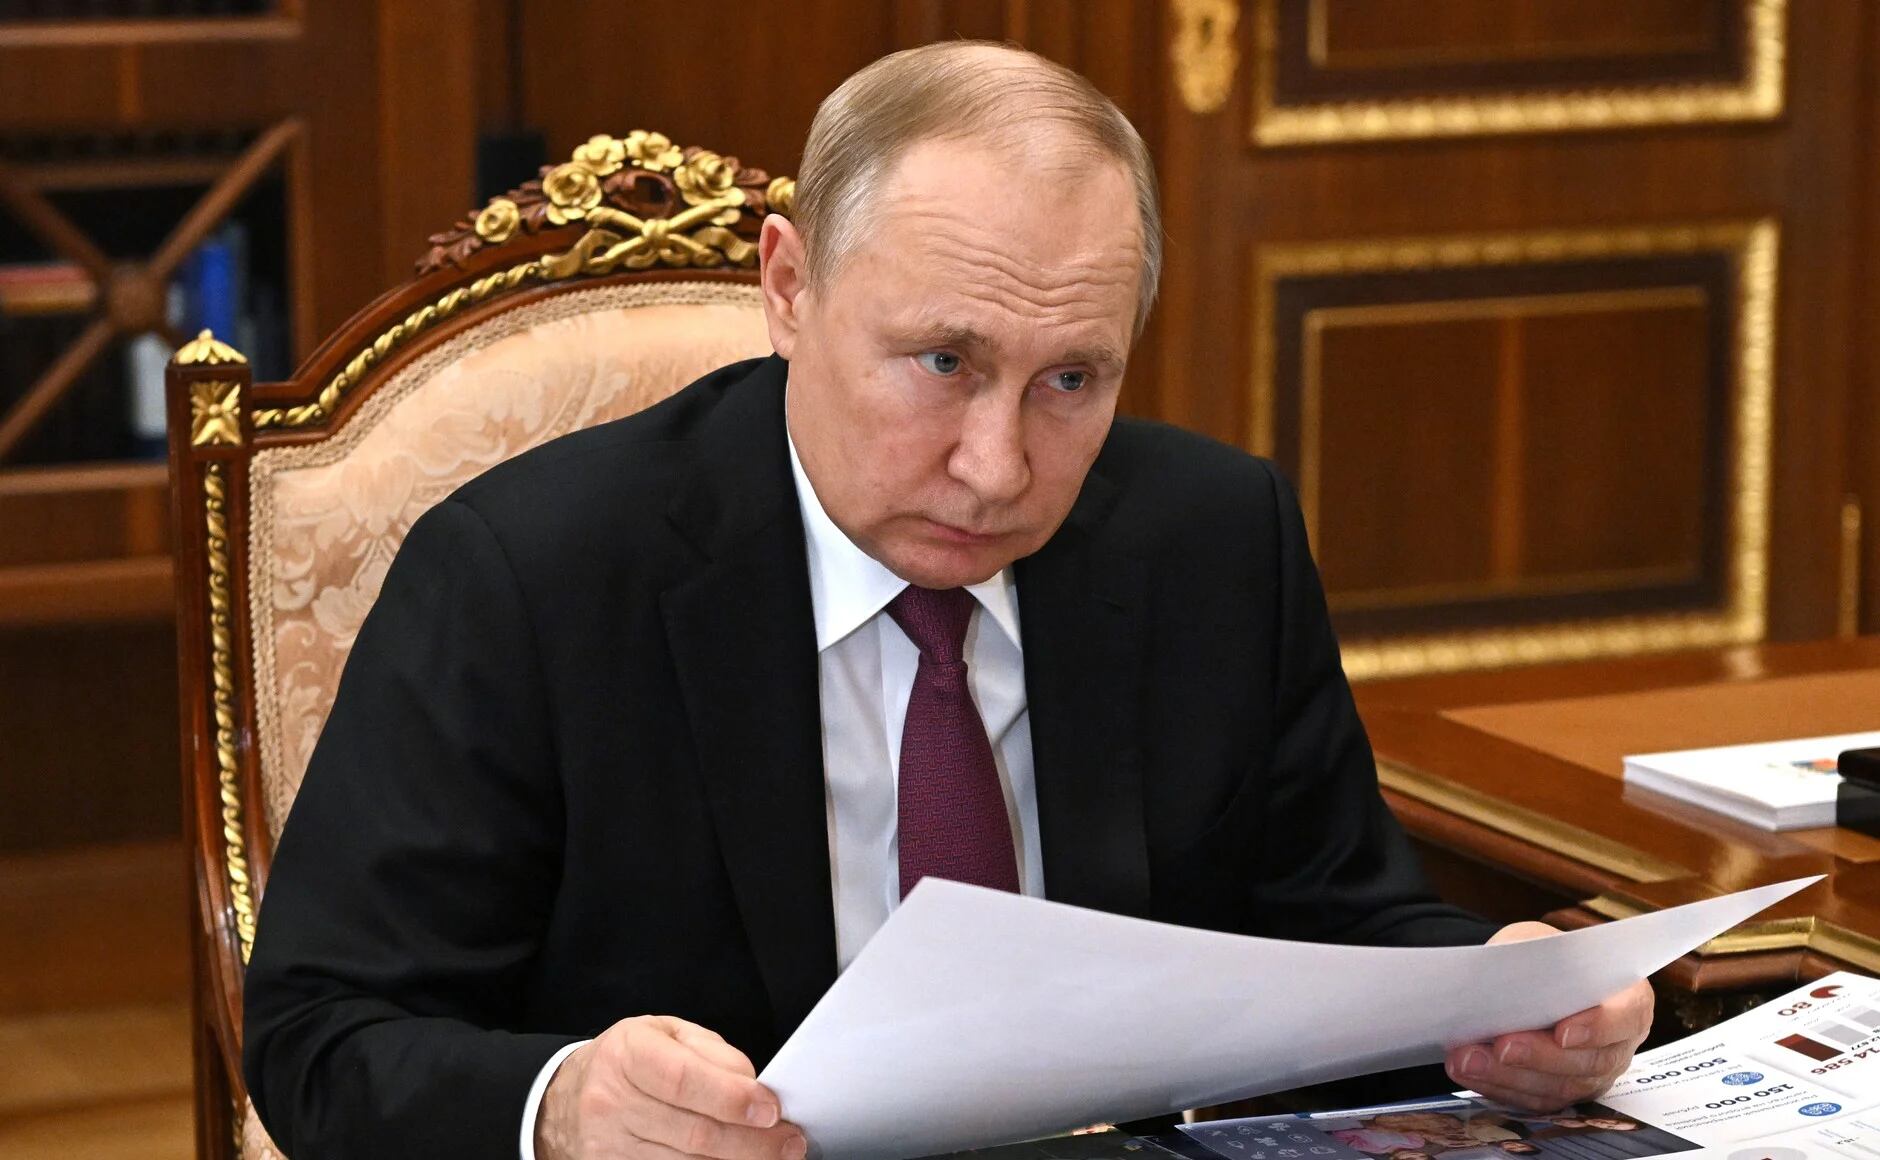 21/03/2022 El presidente de Rusia, Vladimir Putin
POLITICA INTERNACIONAL
-/Kremlin /dpa
